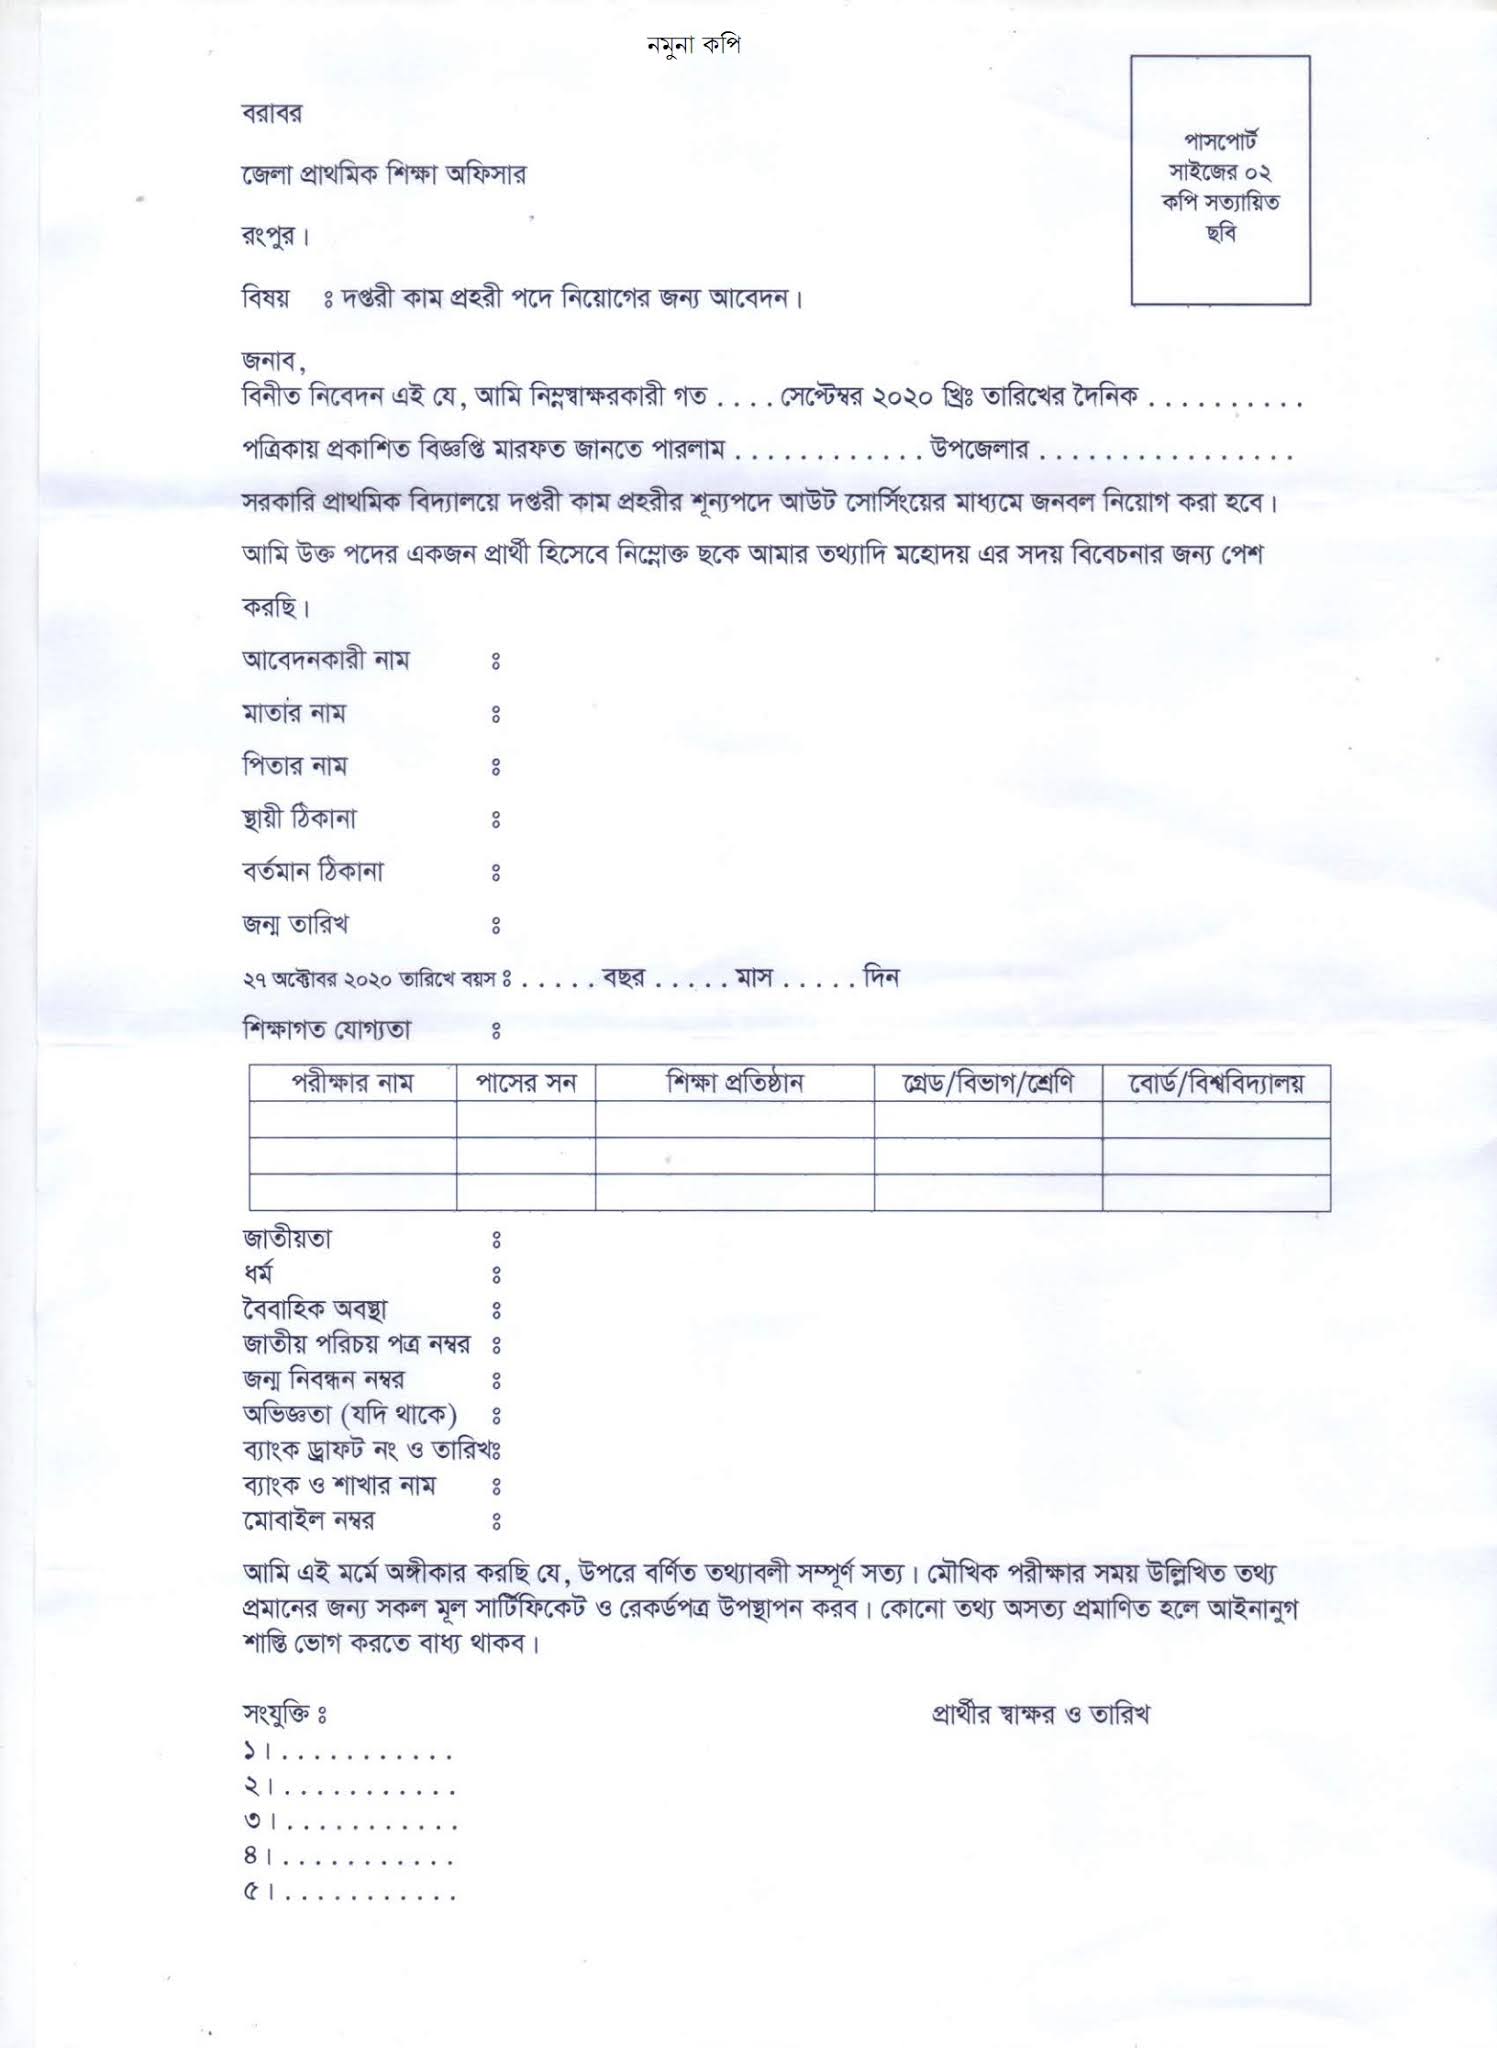 dpe.rangpur job application form